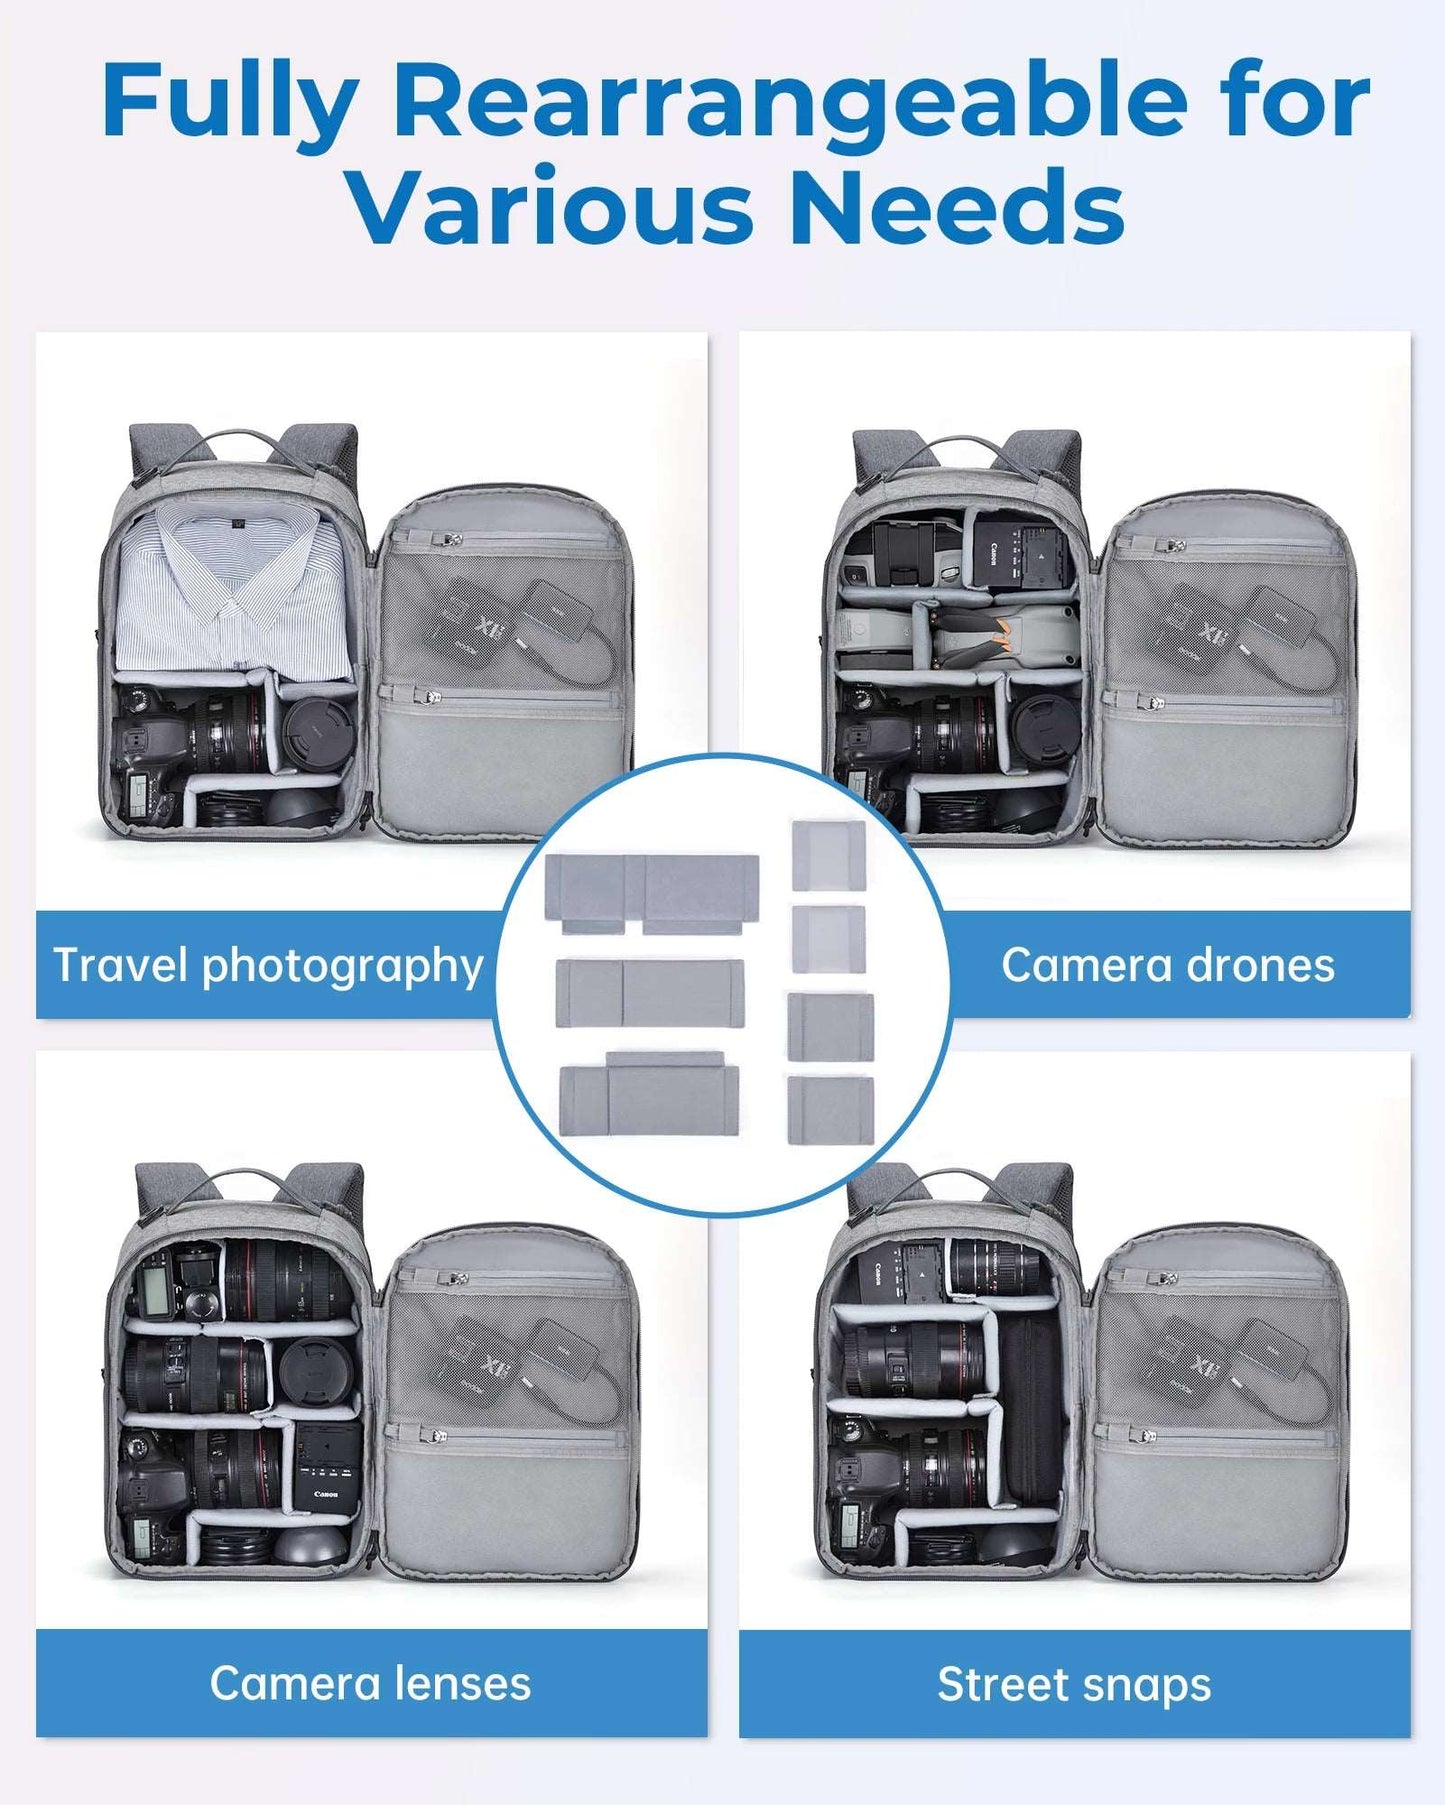 BAGSMART Camera Backpack for Photographers Waterproof